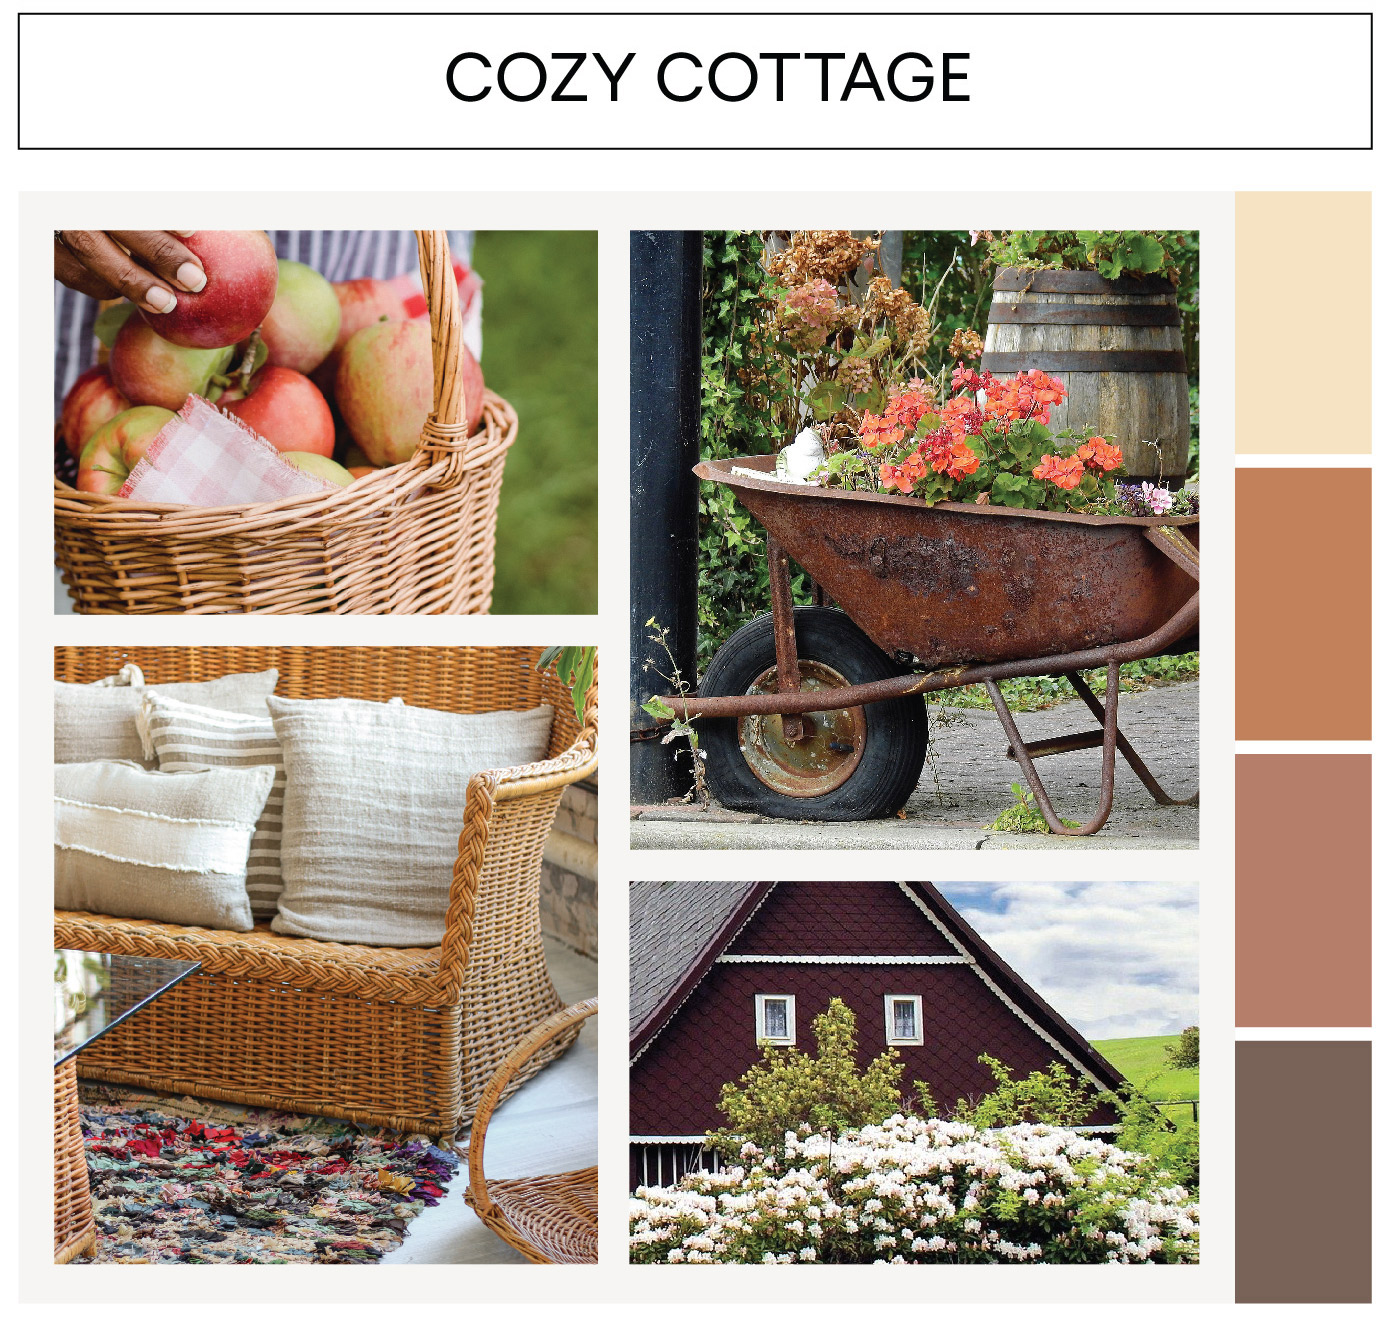 image of cozy cottage planters